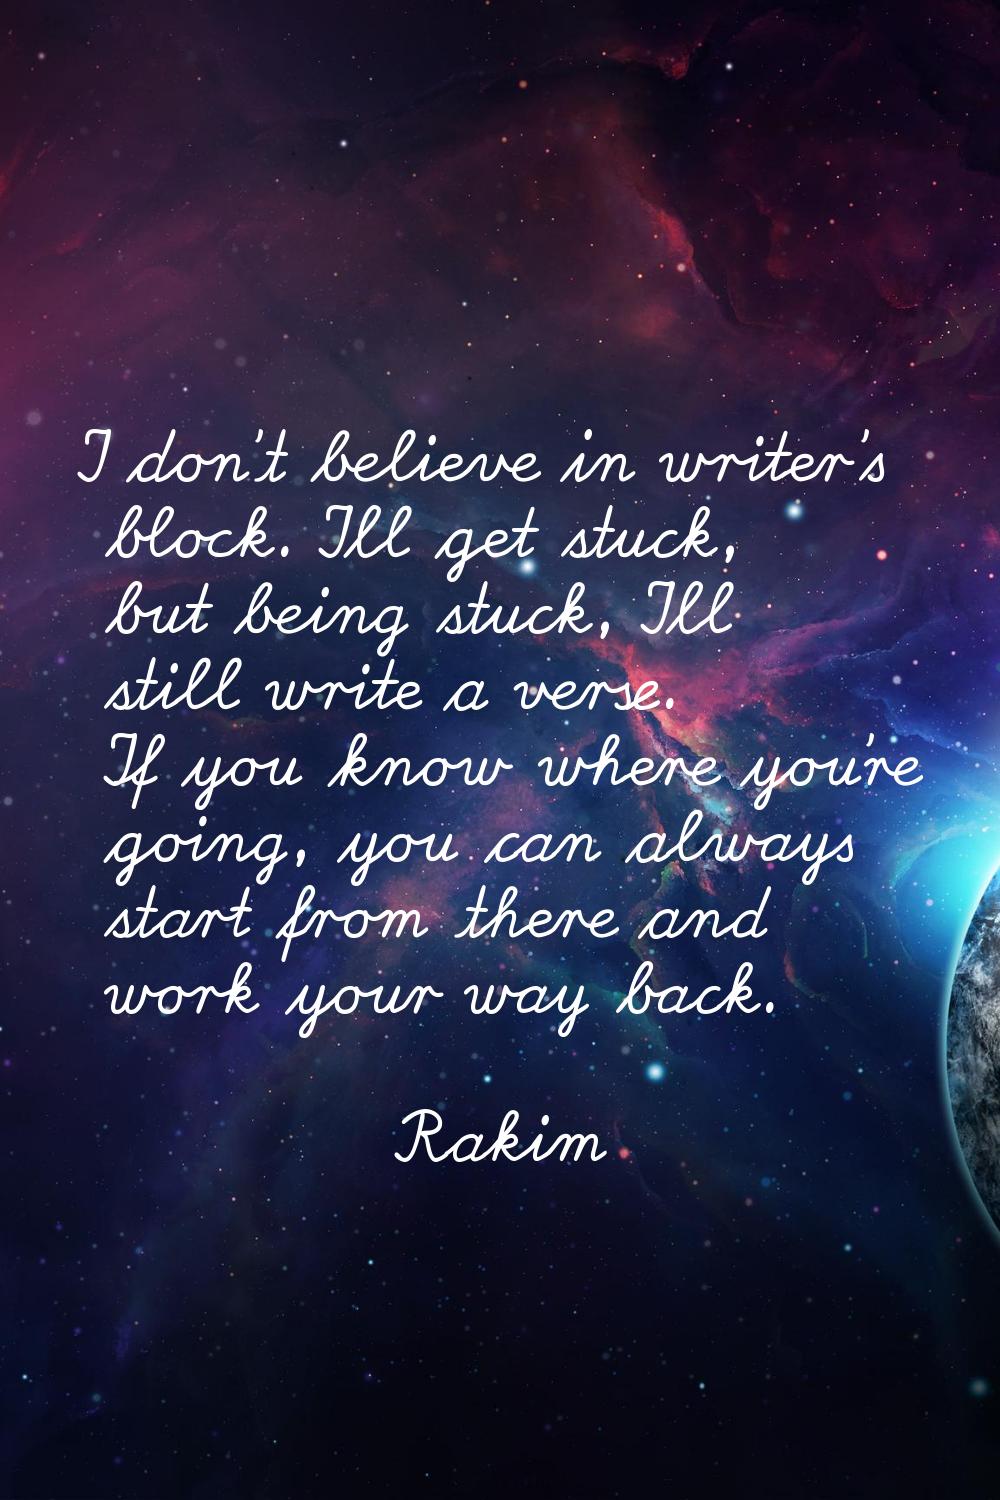 I don't believe in writer's block. I'll get stuck, but being stuck, I'll still write a verse. If yo